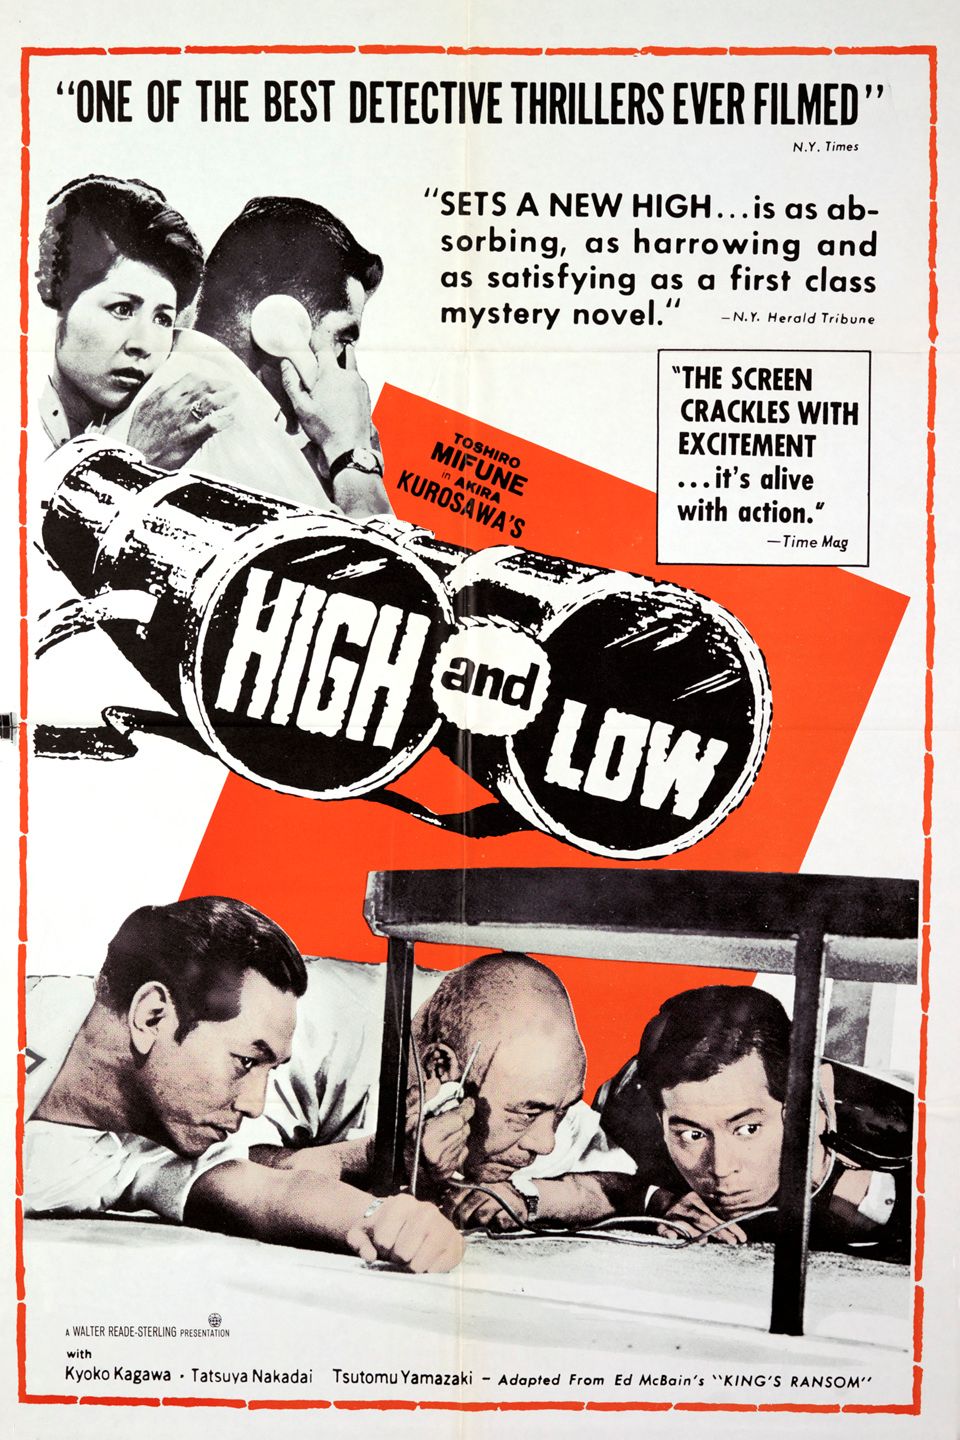 Cartel de la película del director Akira Kurosawa